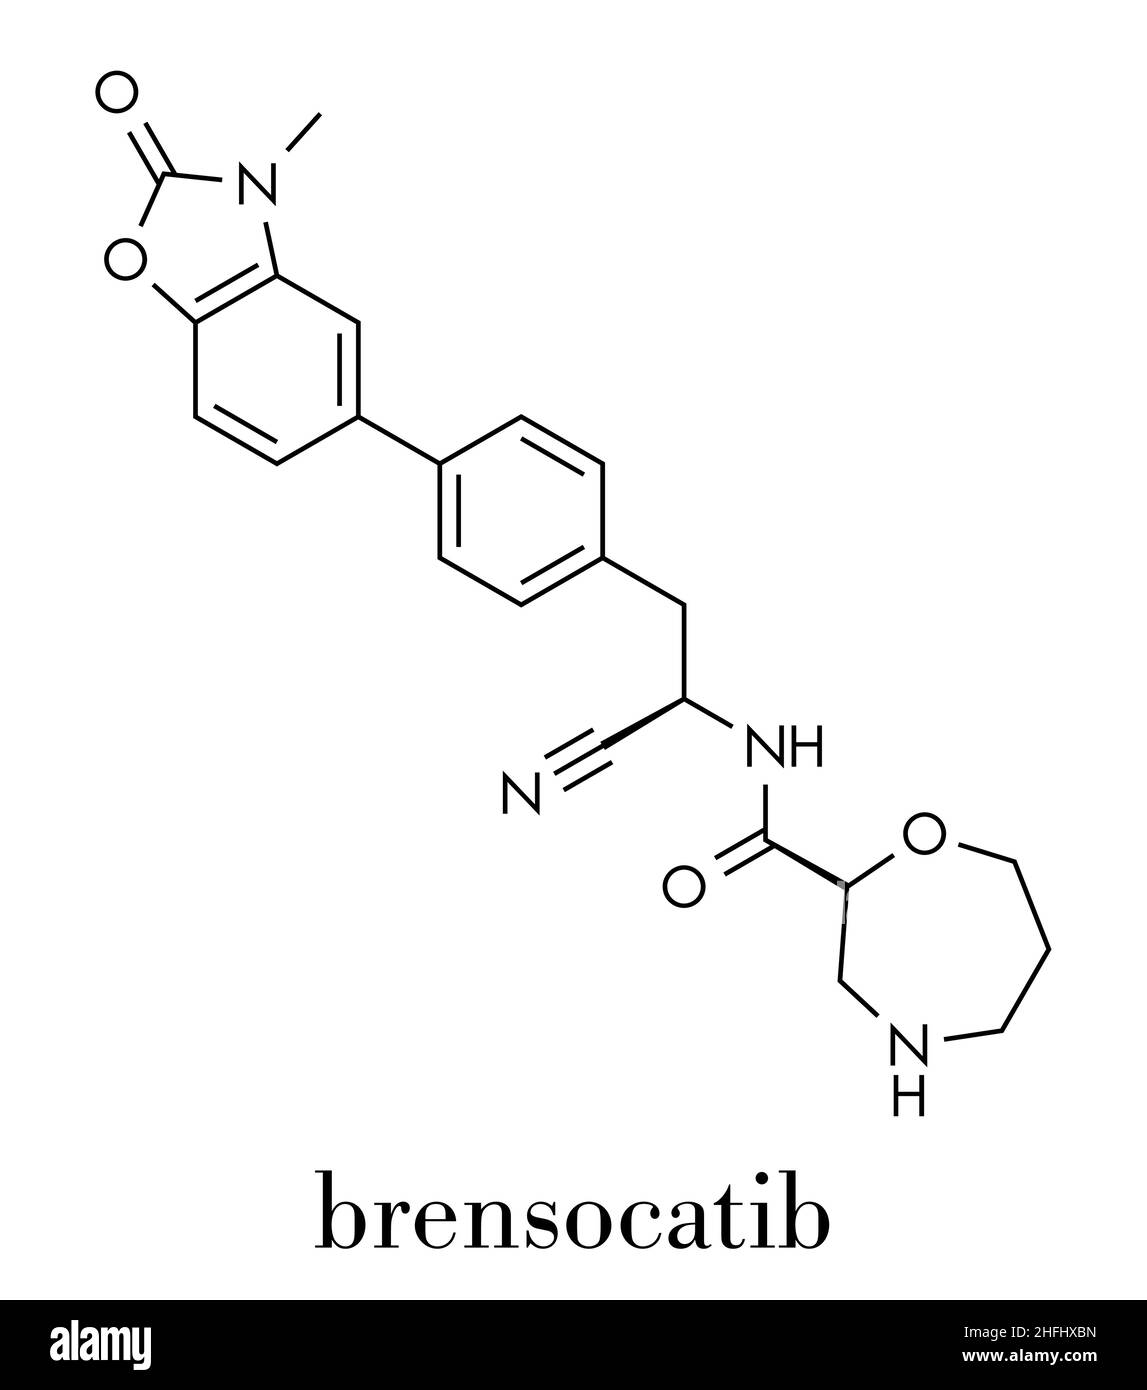 Brensocatib drug molecule. Skeletal formula. Stock Vector